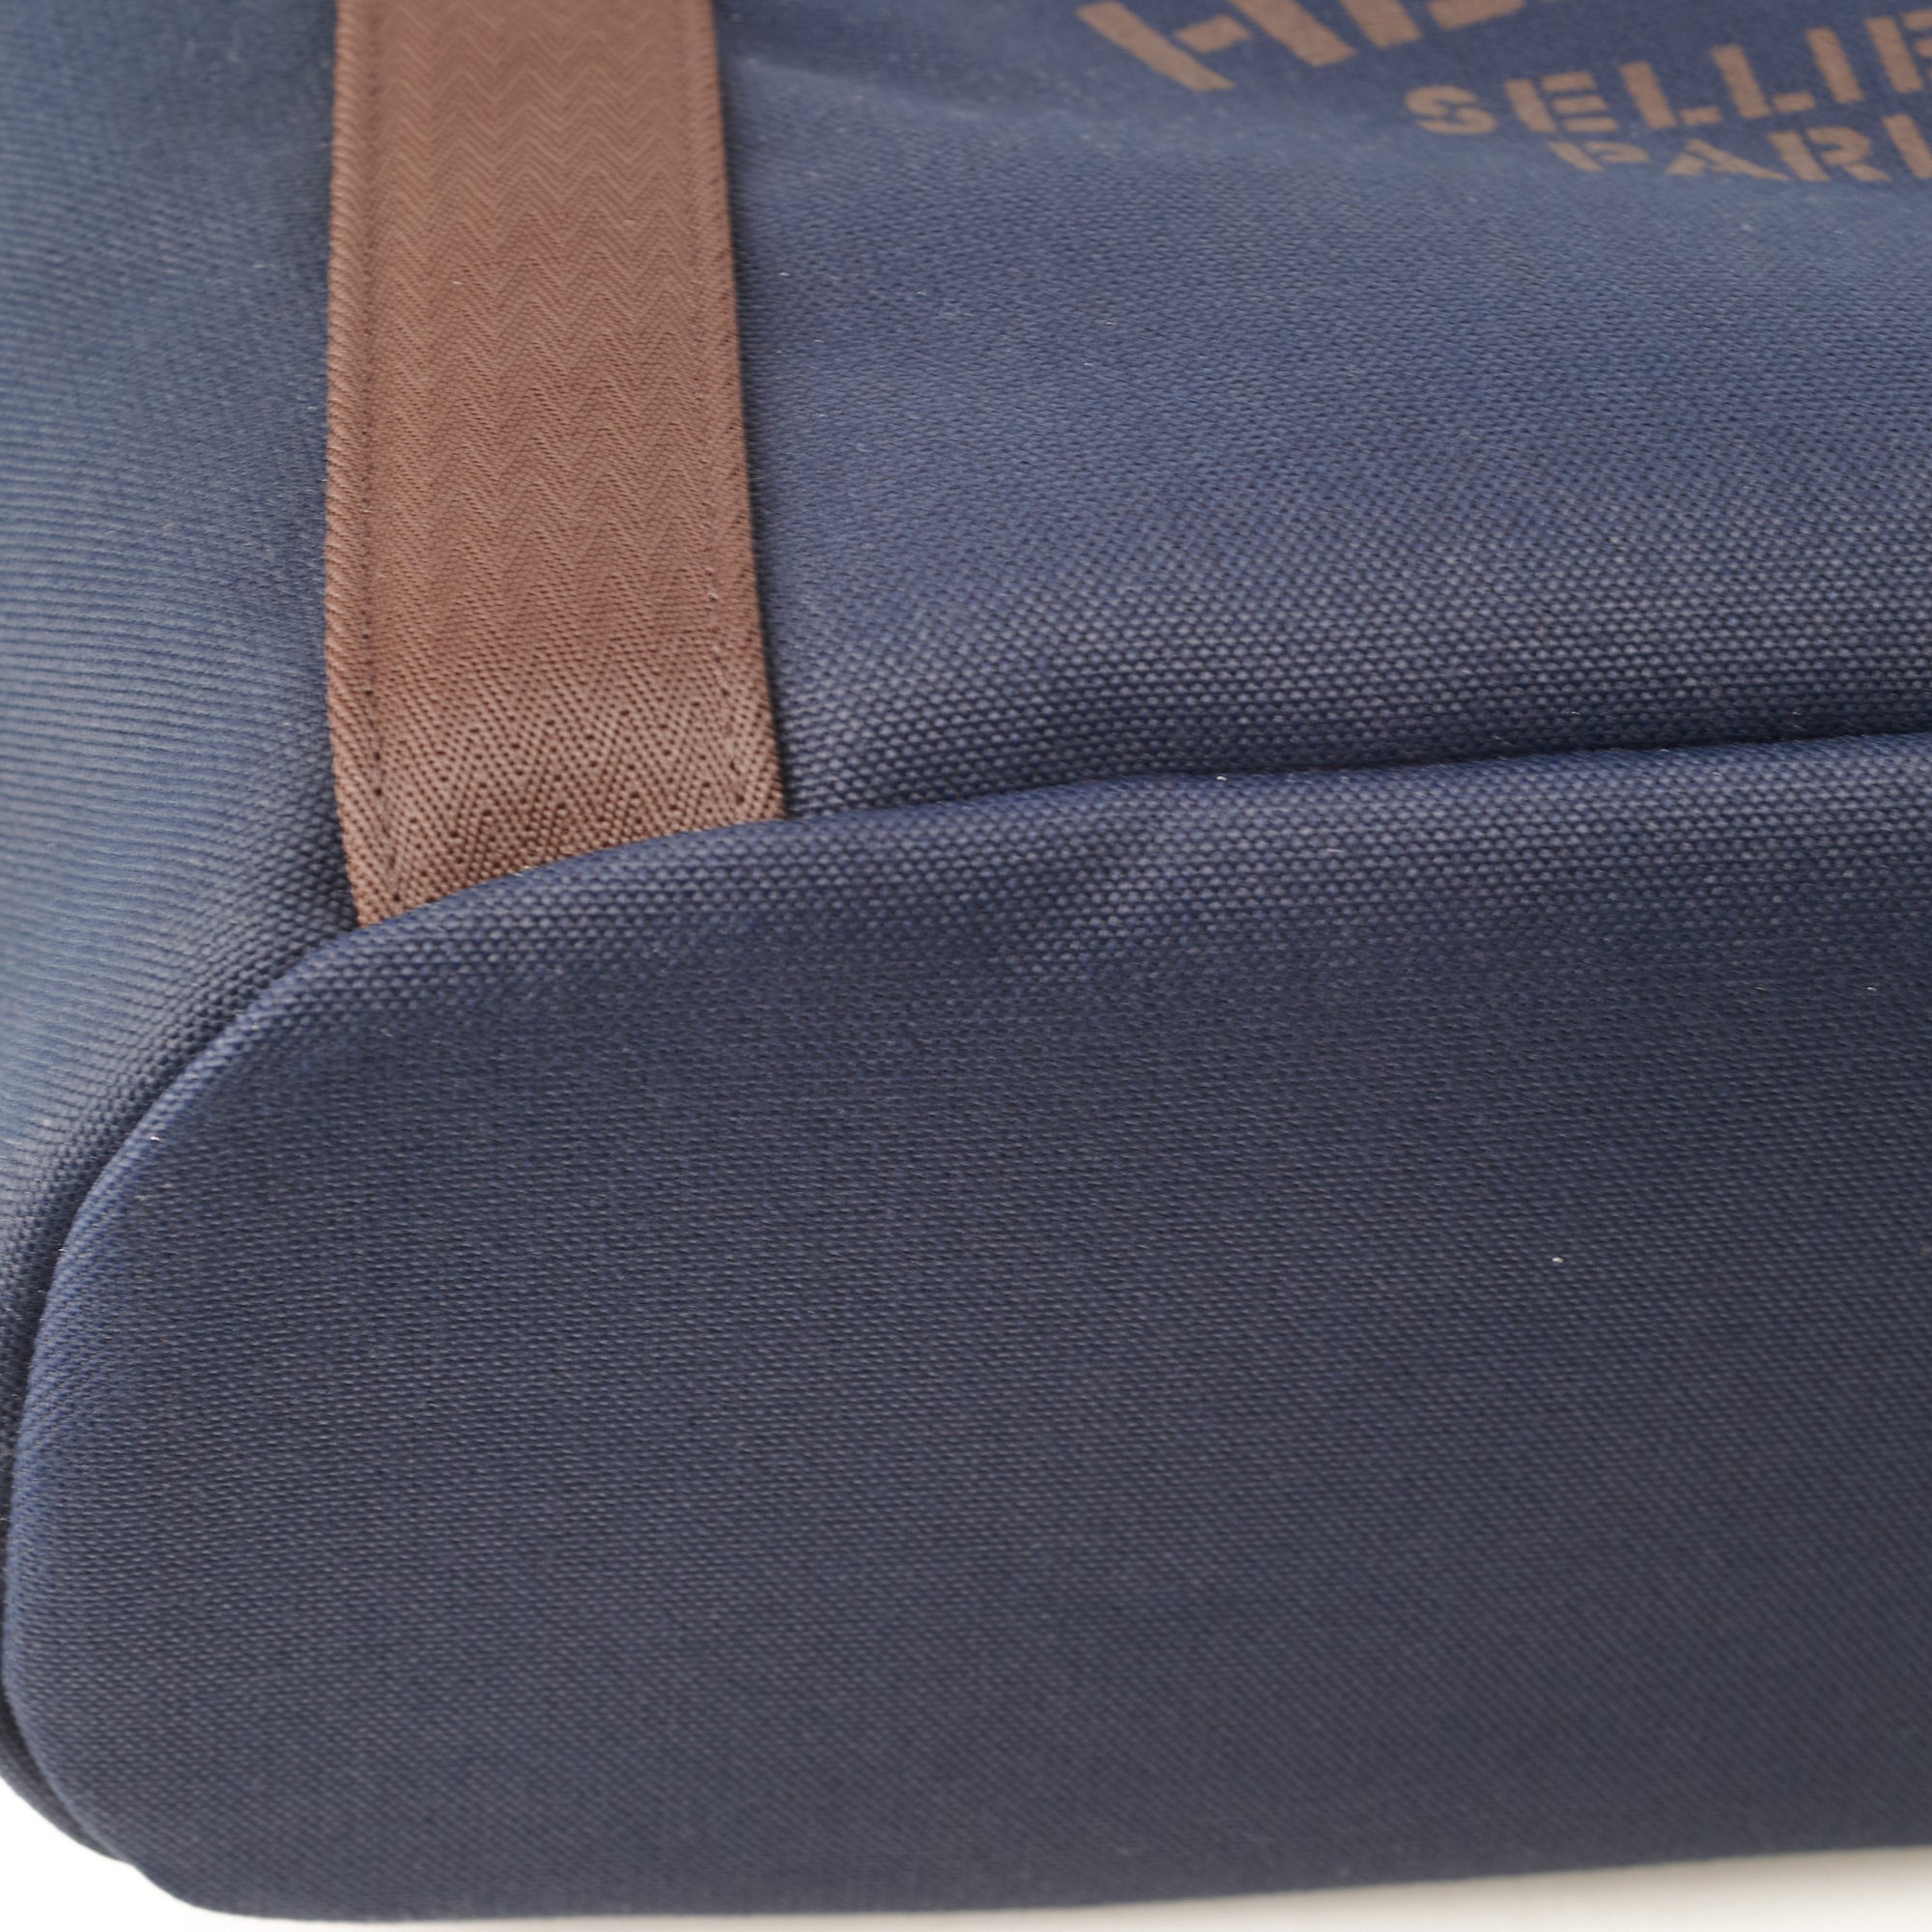 NEW HERMES The Grooming Bag Bleu Navy/Feu Handbag Tote Strap Bag – Empire  Lusso